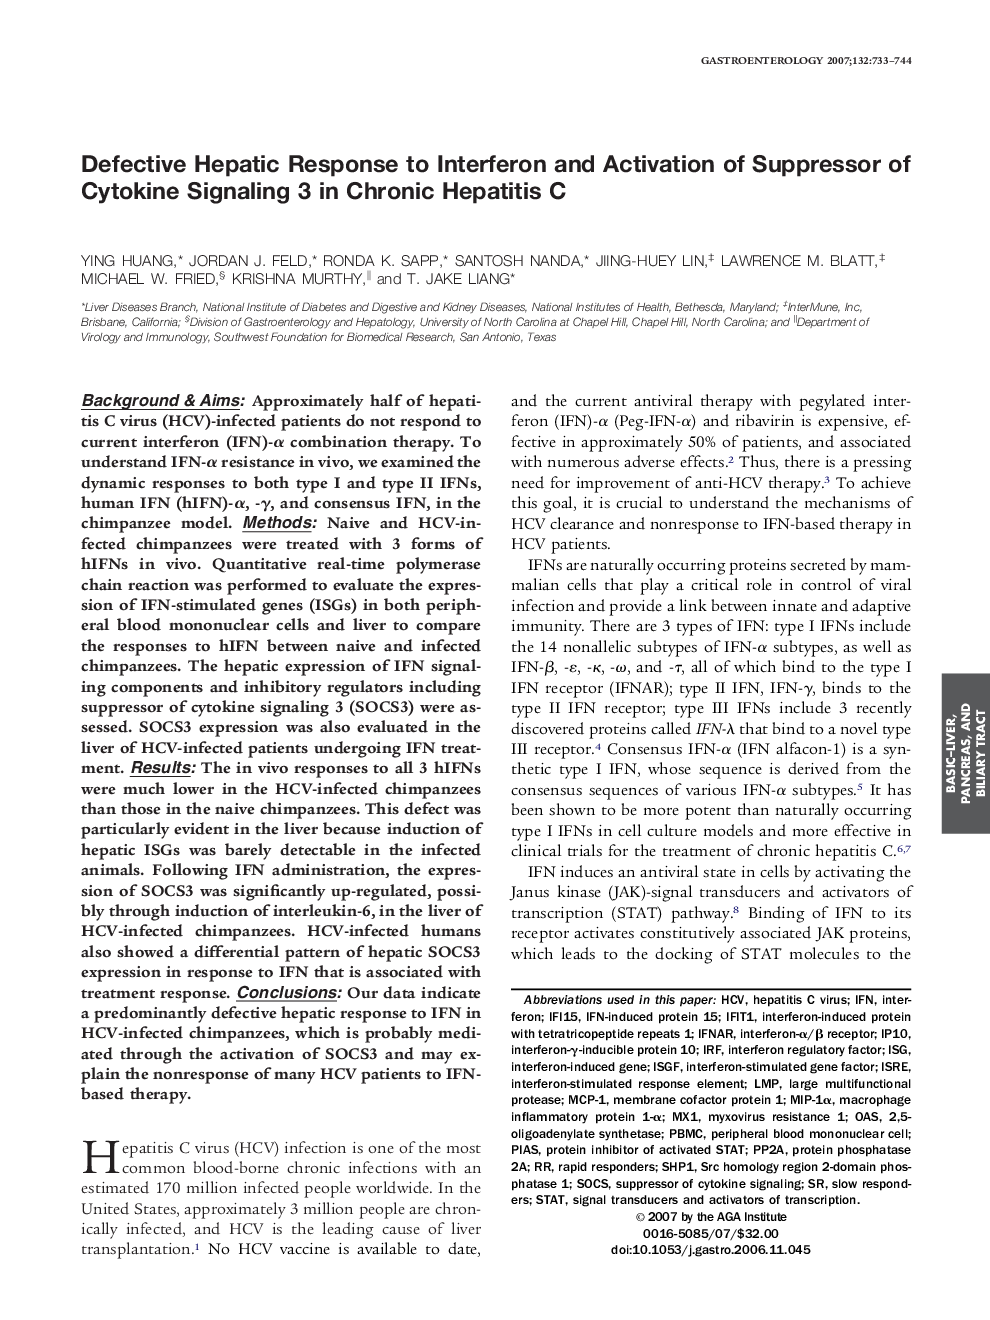 Defective Hepatic Response to Interferon and Activation of Suppressor of Cytokine Signaling 3 in Chronic Hepatitis C 